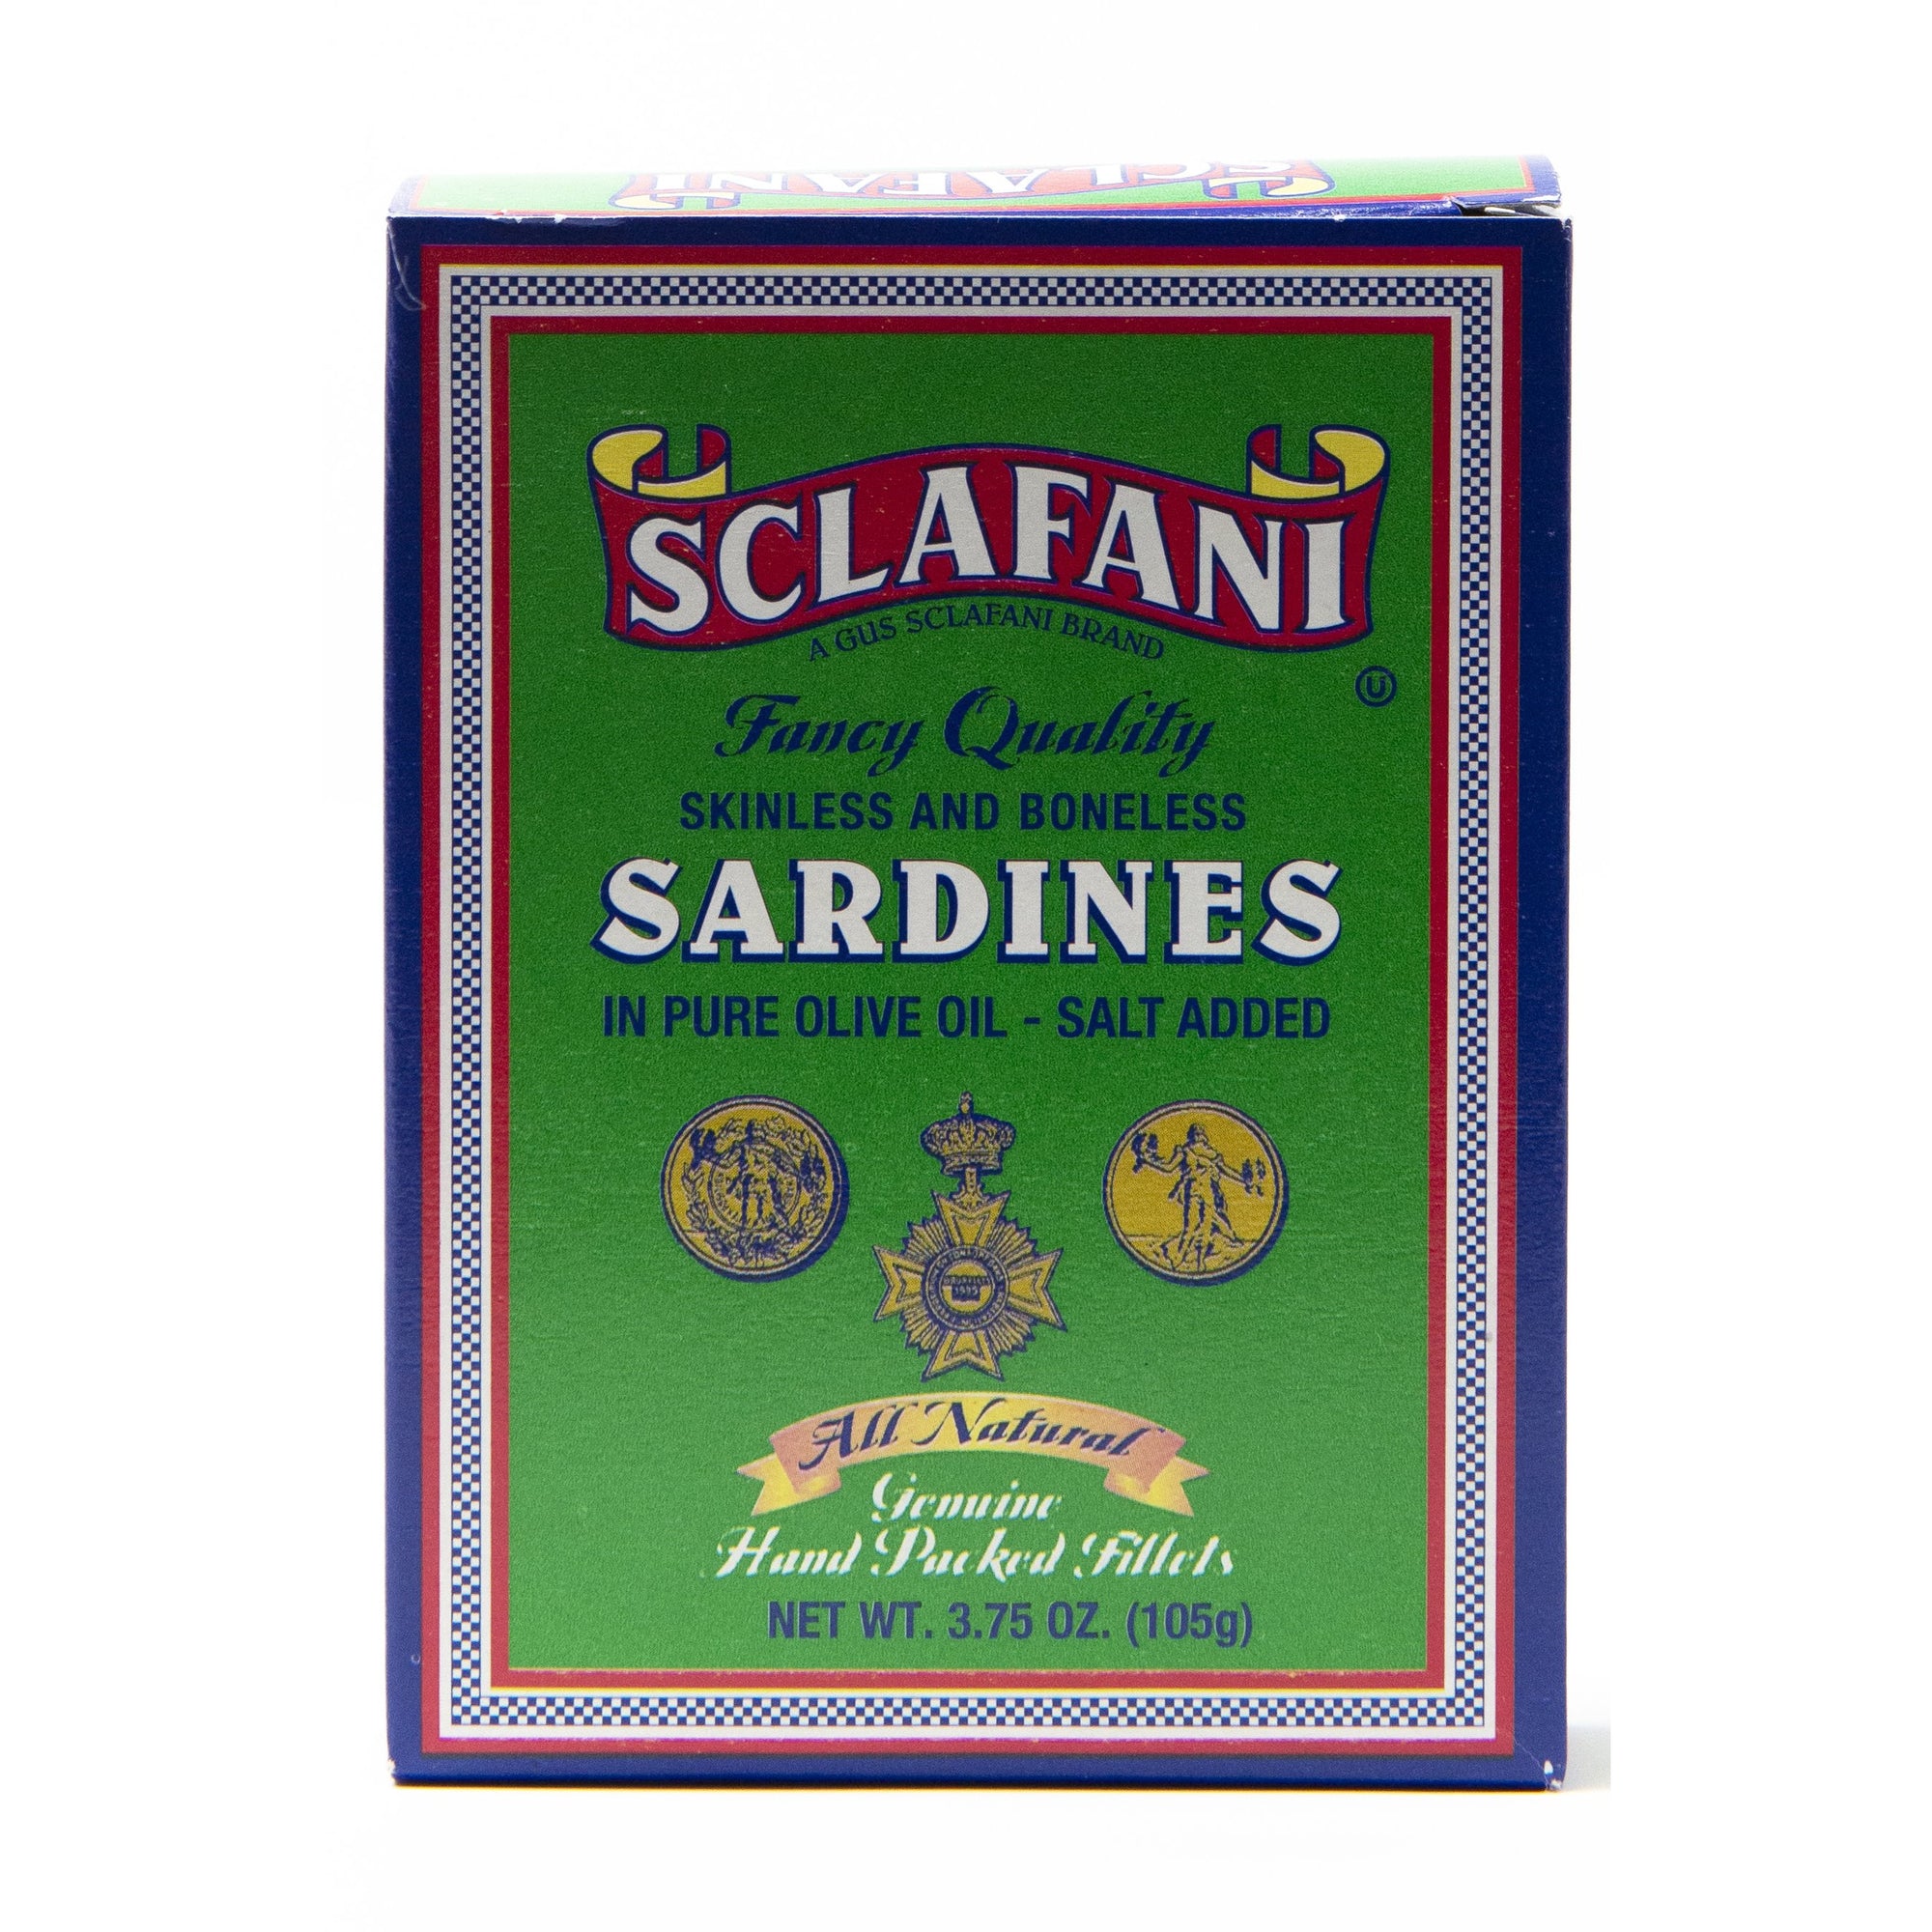 Sclafani Sardines in Pure Olive Oil 3.75